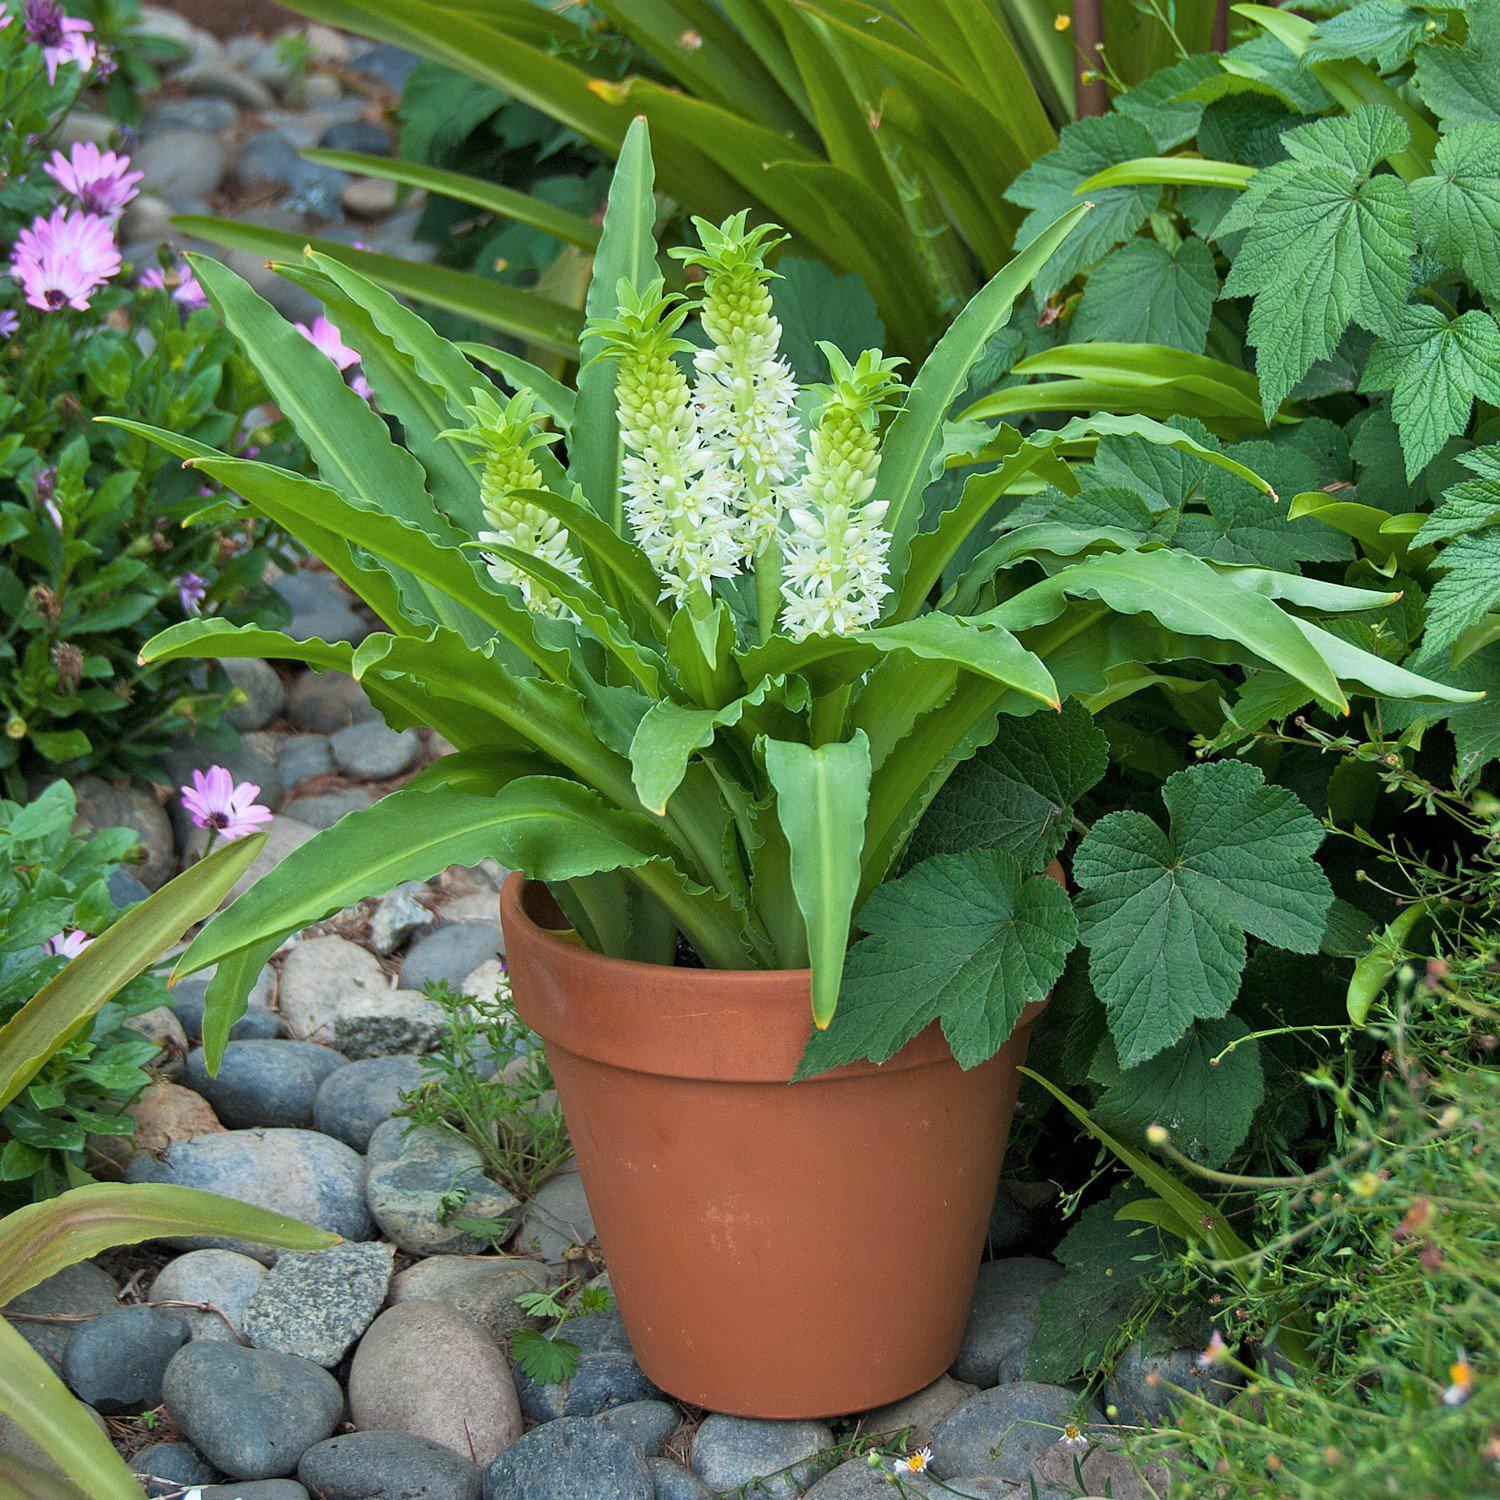 A Pot Full of "Maui" Pineapple Lilies